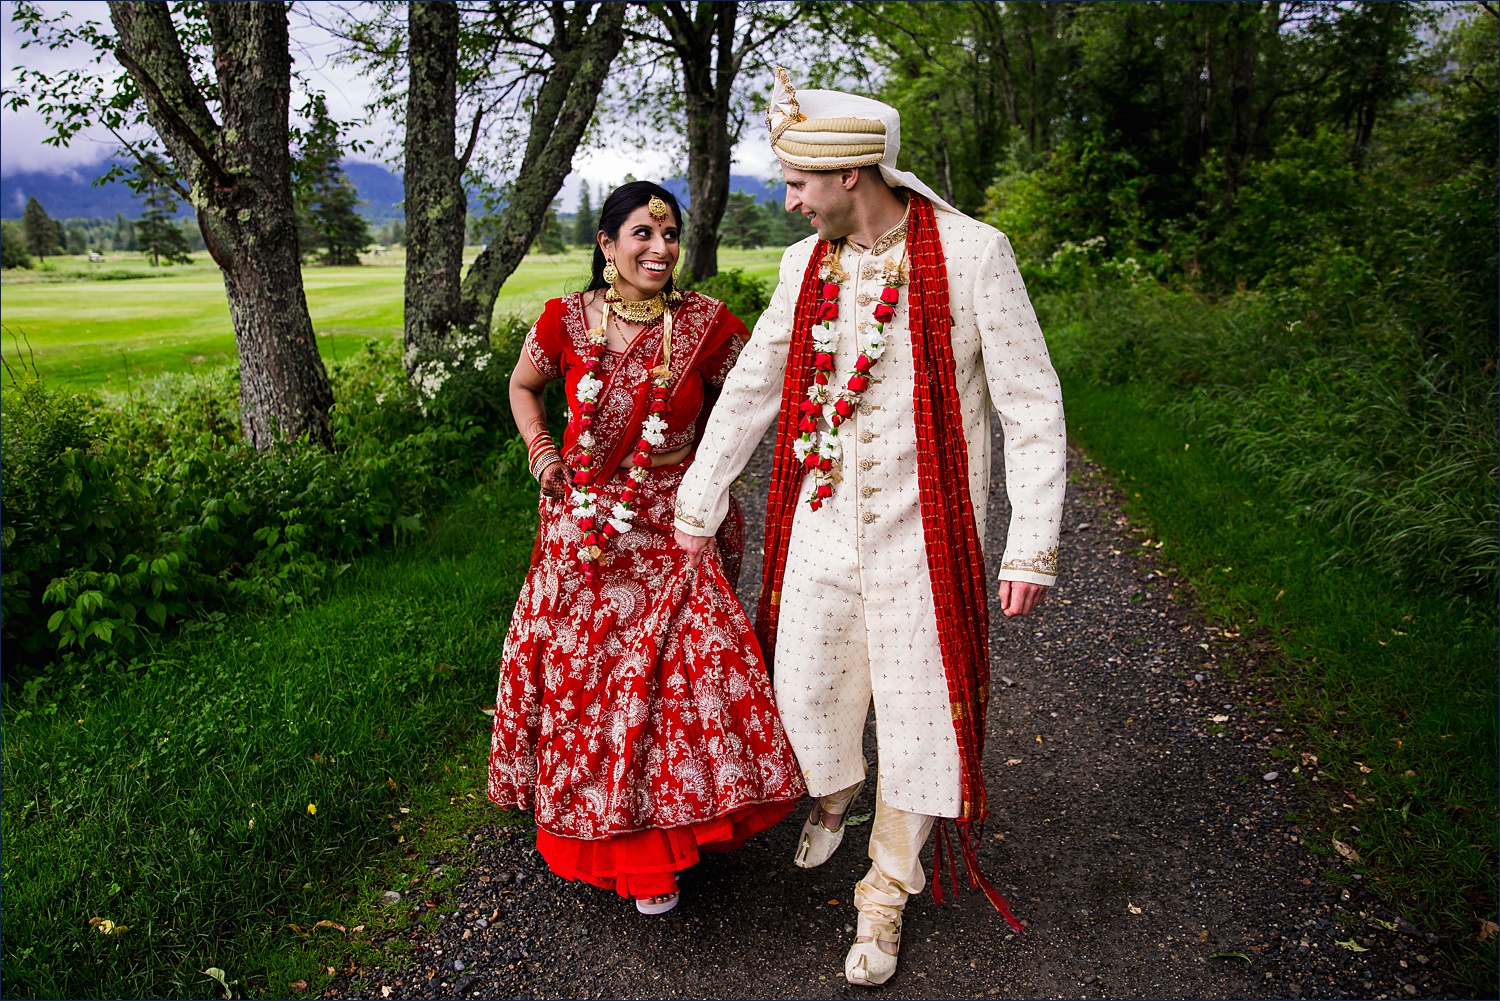 The newlyweds walk through the property of Omni Mount Washington Resort sharing a laugh